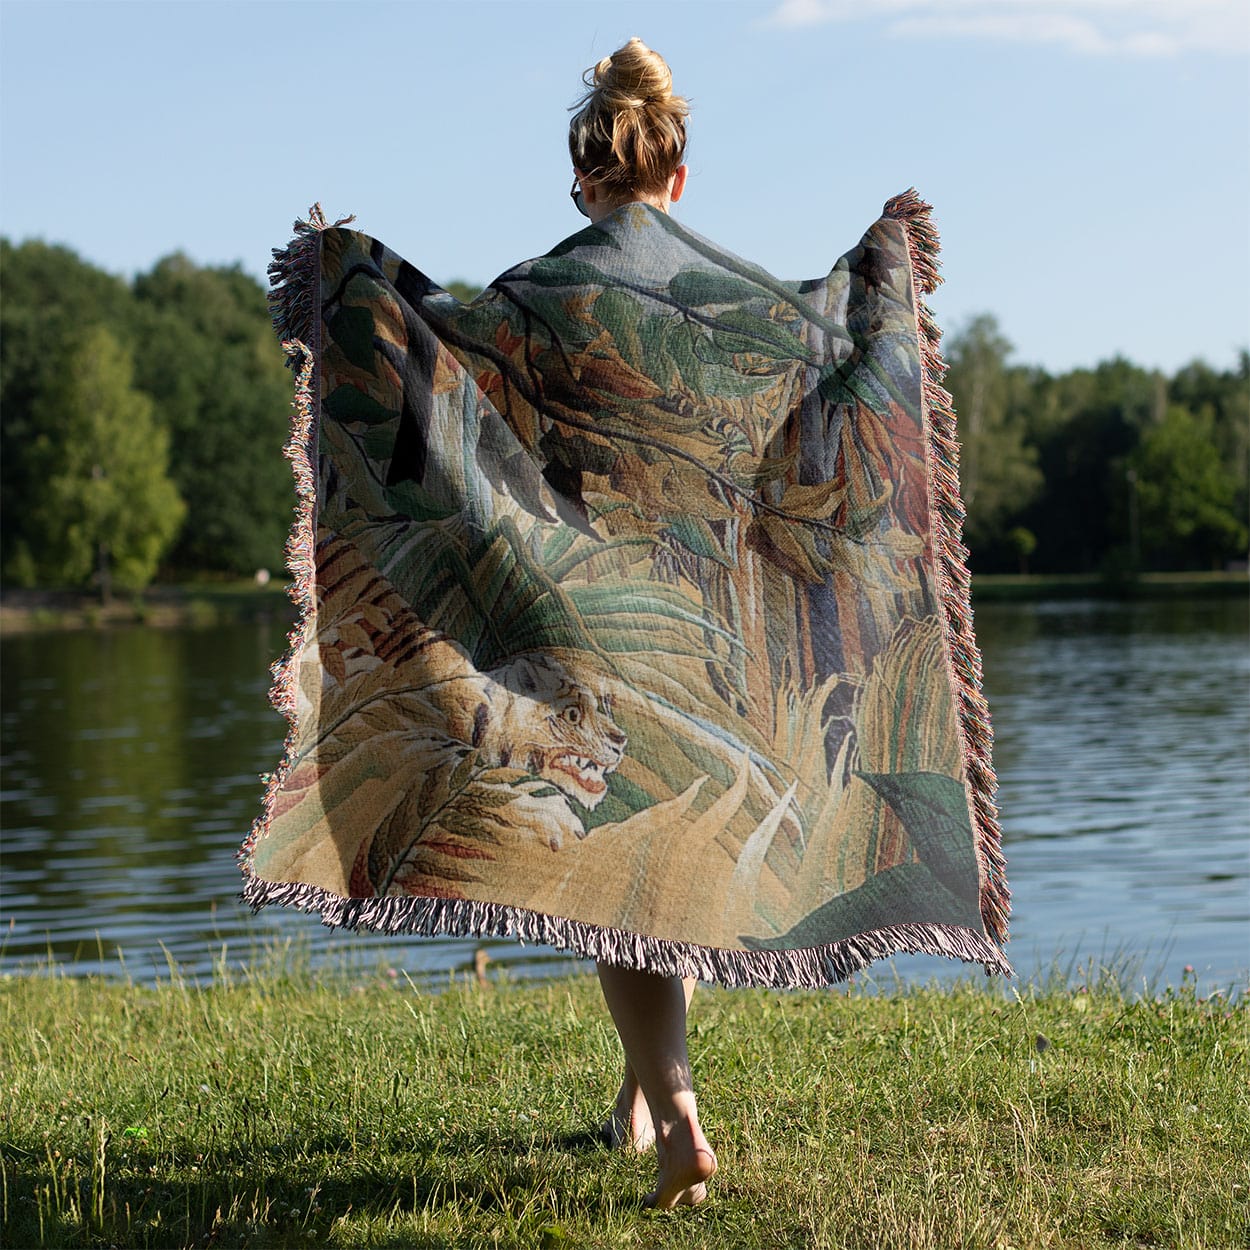 Jungle Landscape Woven Blanket Held on a Woman's Back Outside